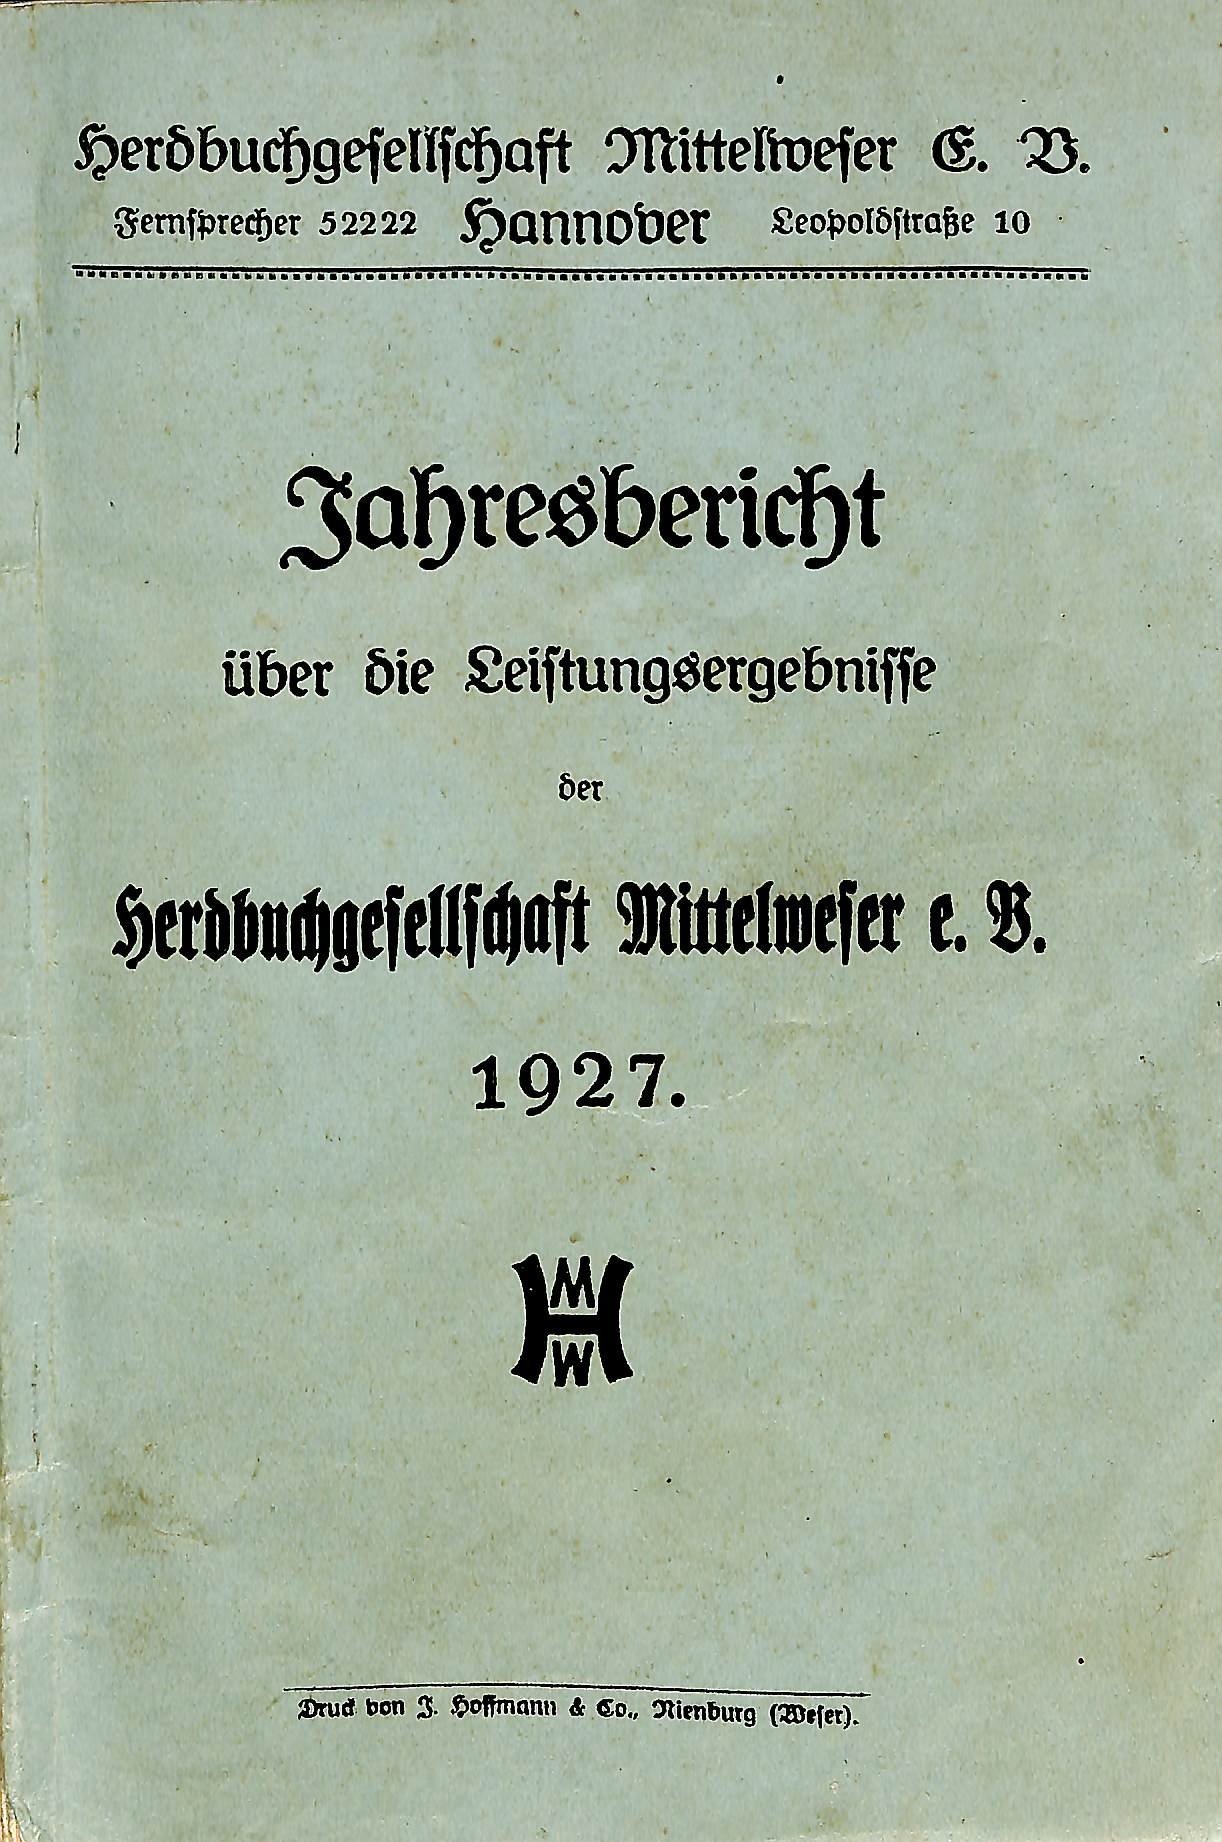 Jahresbericht über die Leistungsergebnisse der Herdbuchgesellschaft Mittelweser e.V. 1927 (Kreismuseum Syke CC BY-NC-SA)